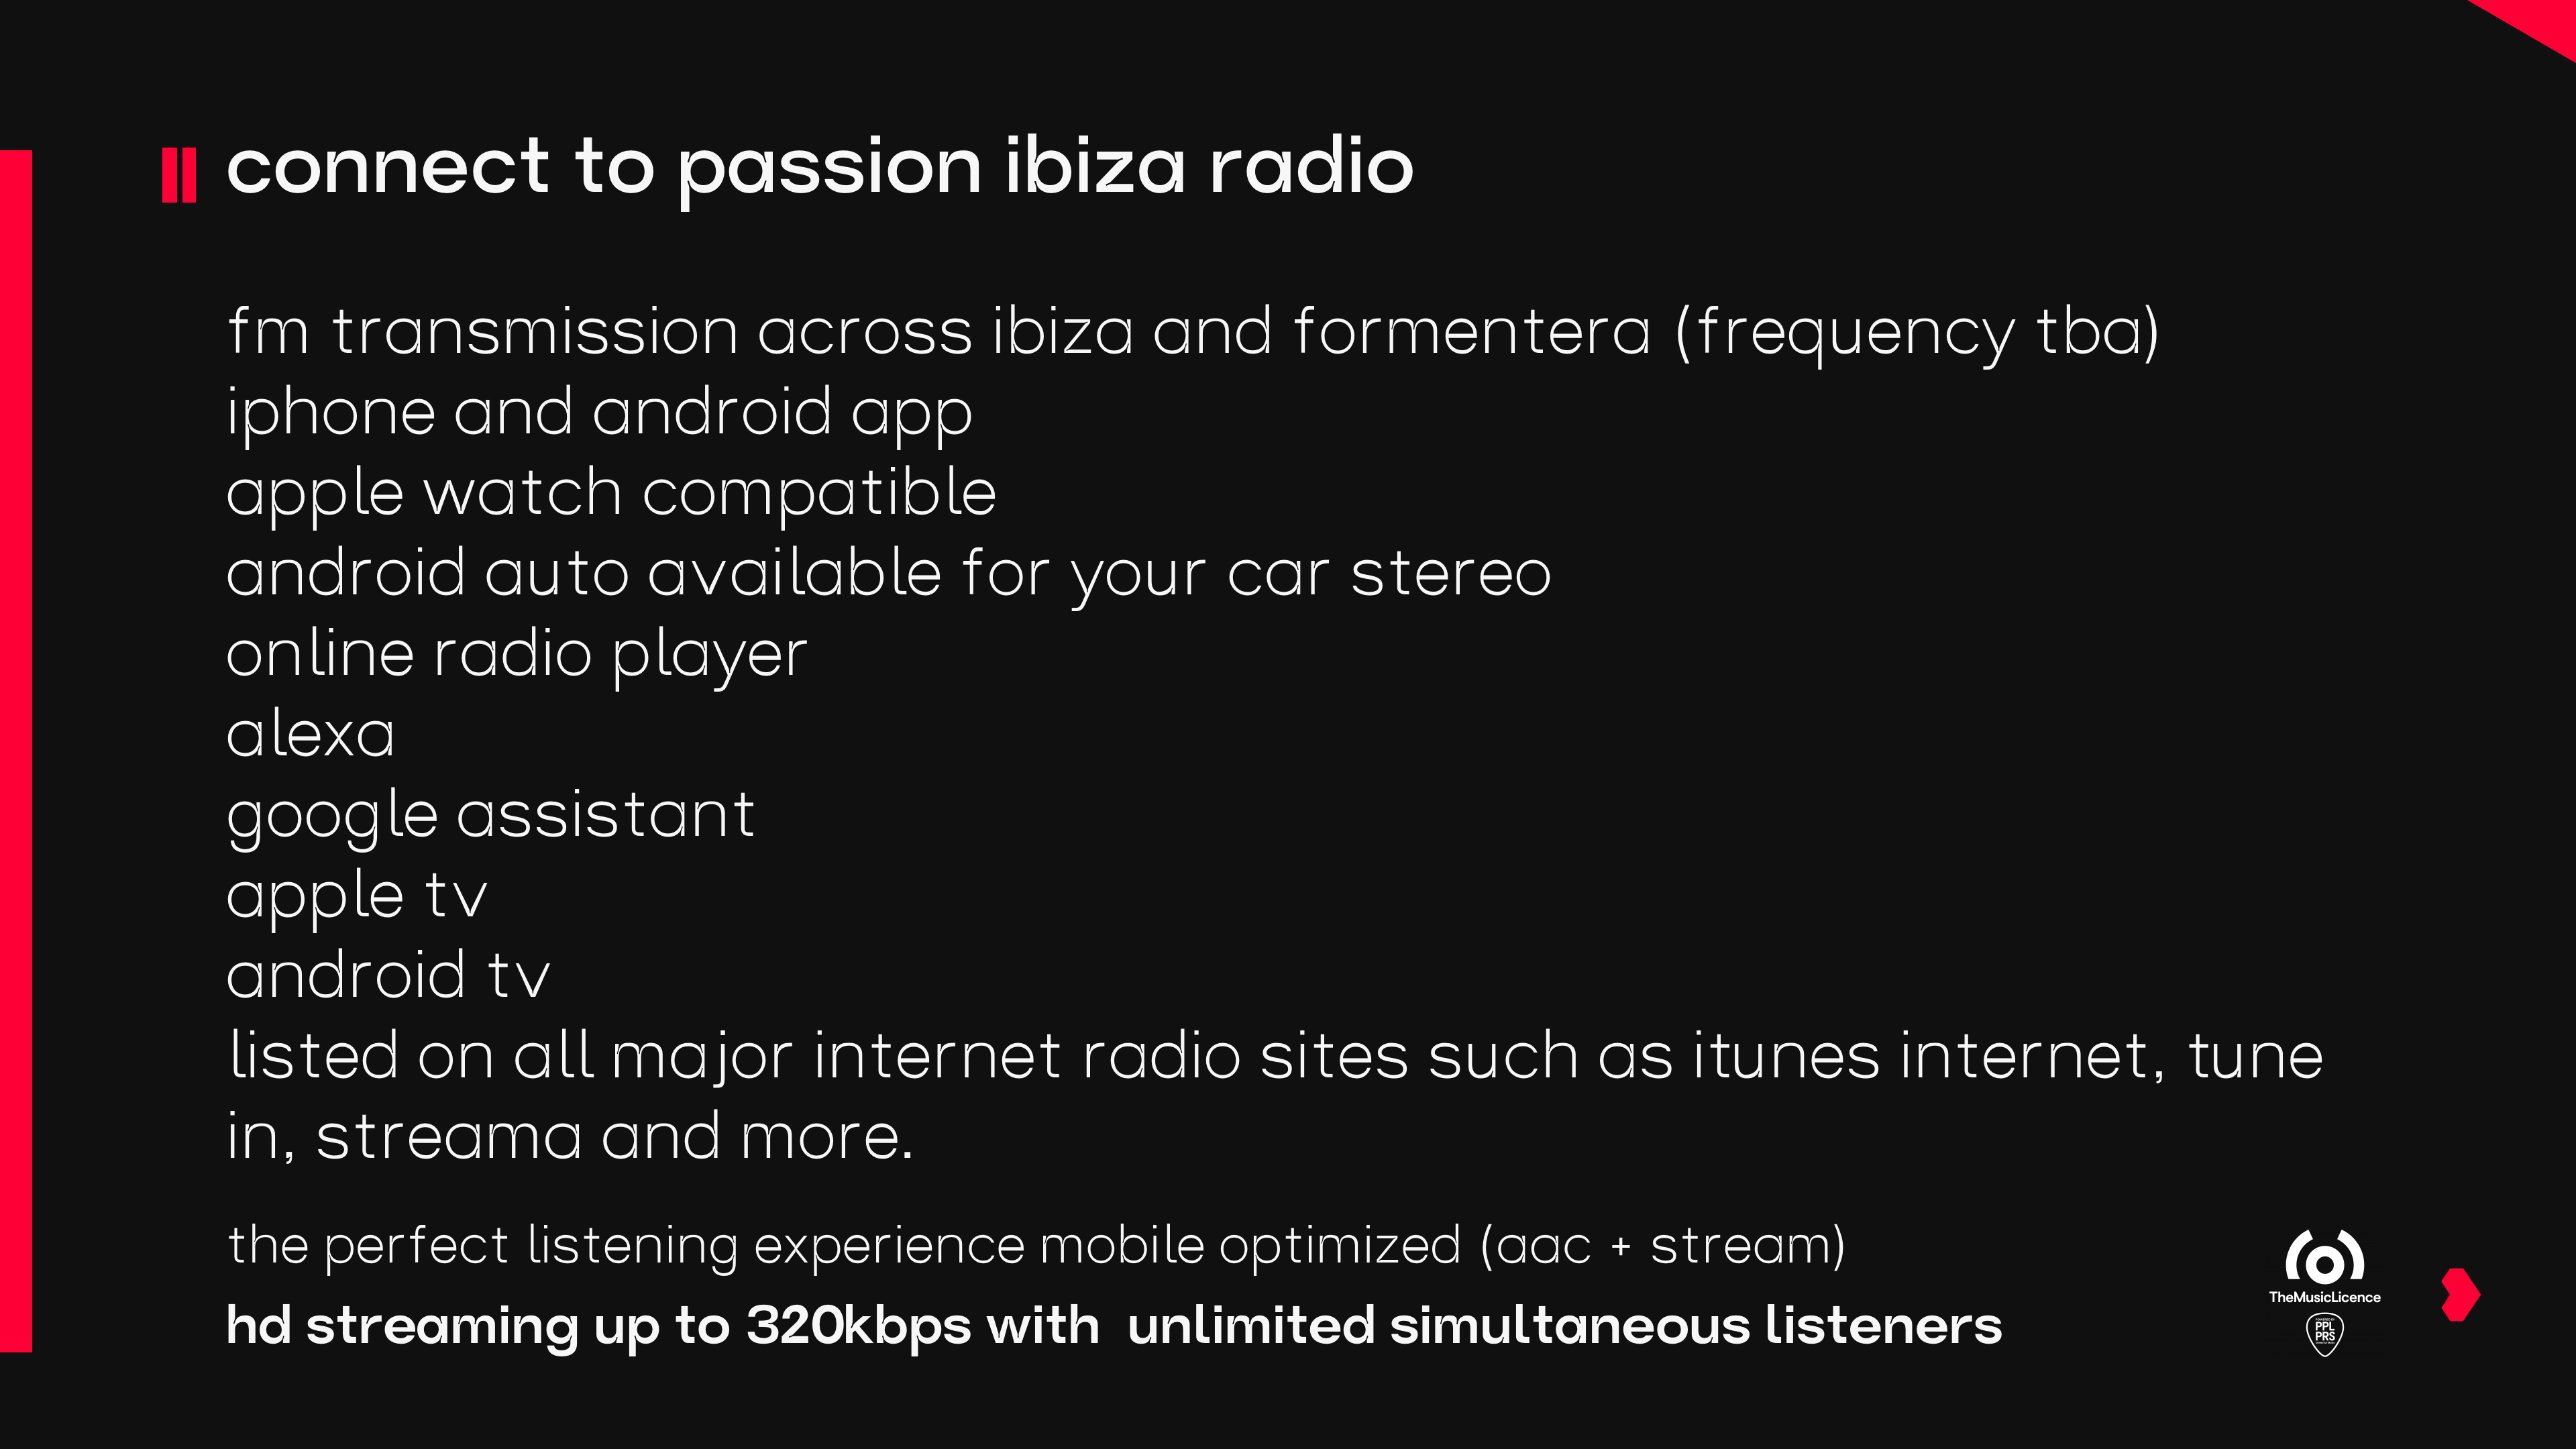 passion ibiza radio house music station